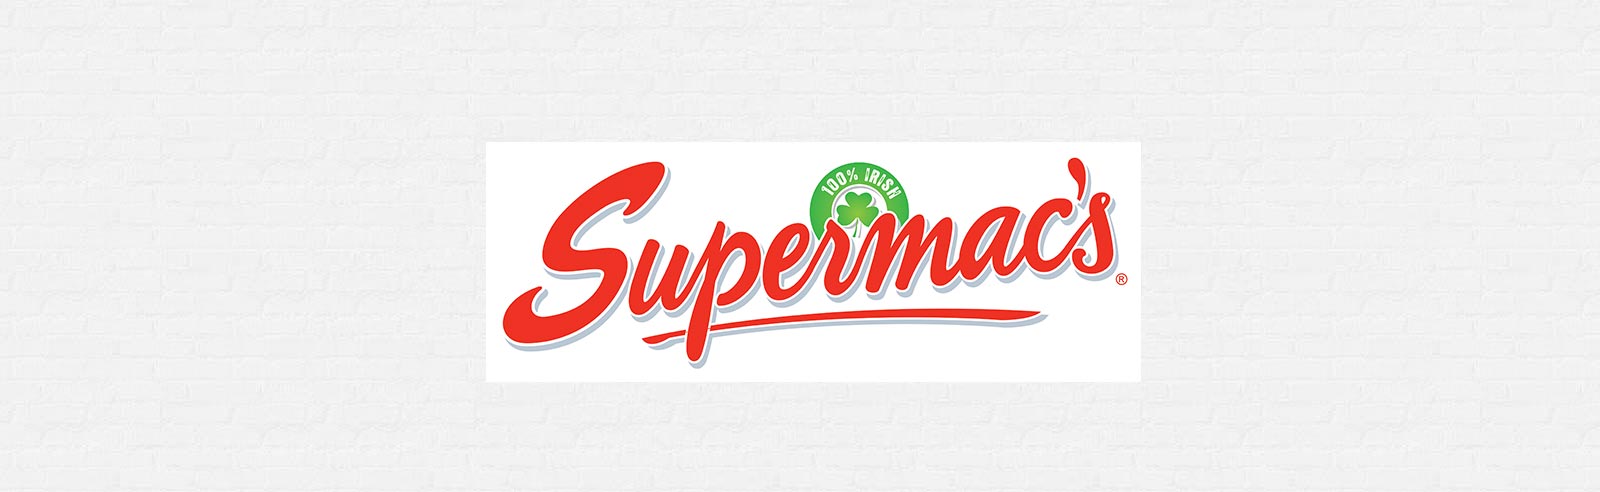 Supermac’s… it’s not McDonald’s